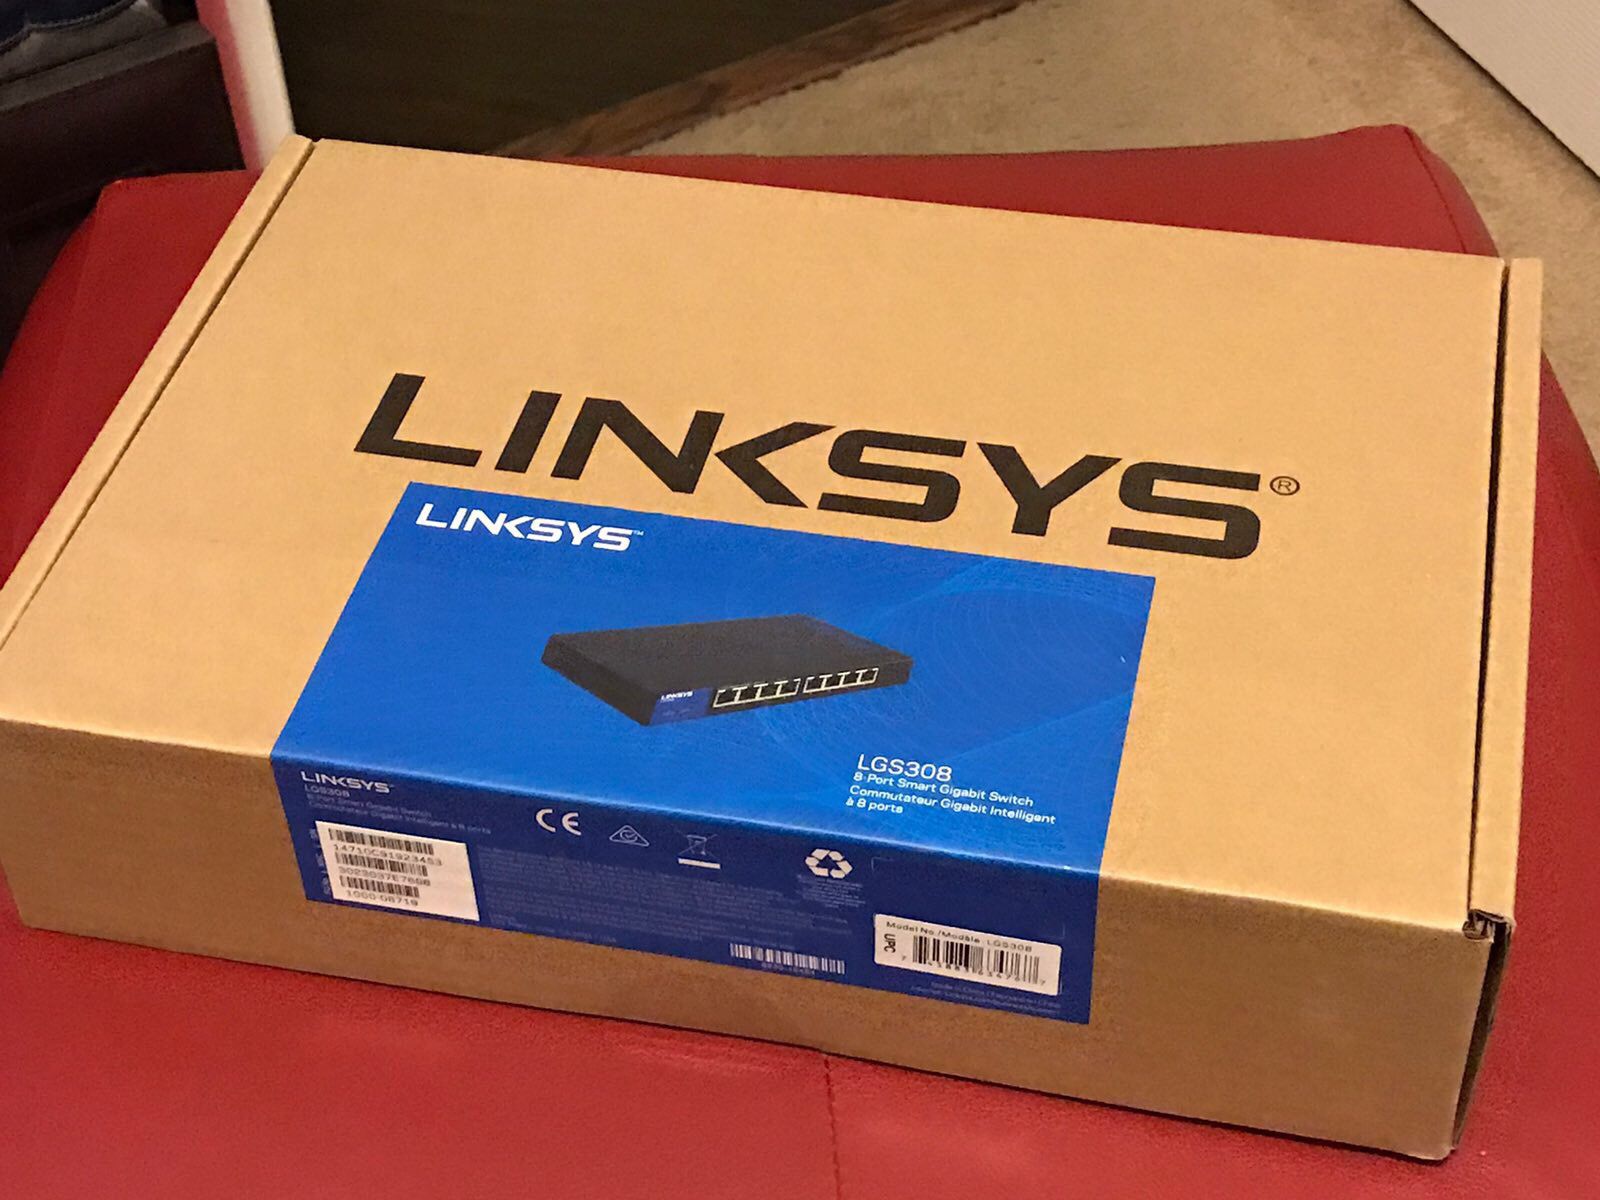 Linksys Business 8-port gigabit switch, brand new sealed box